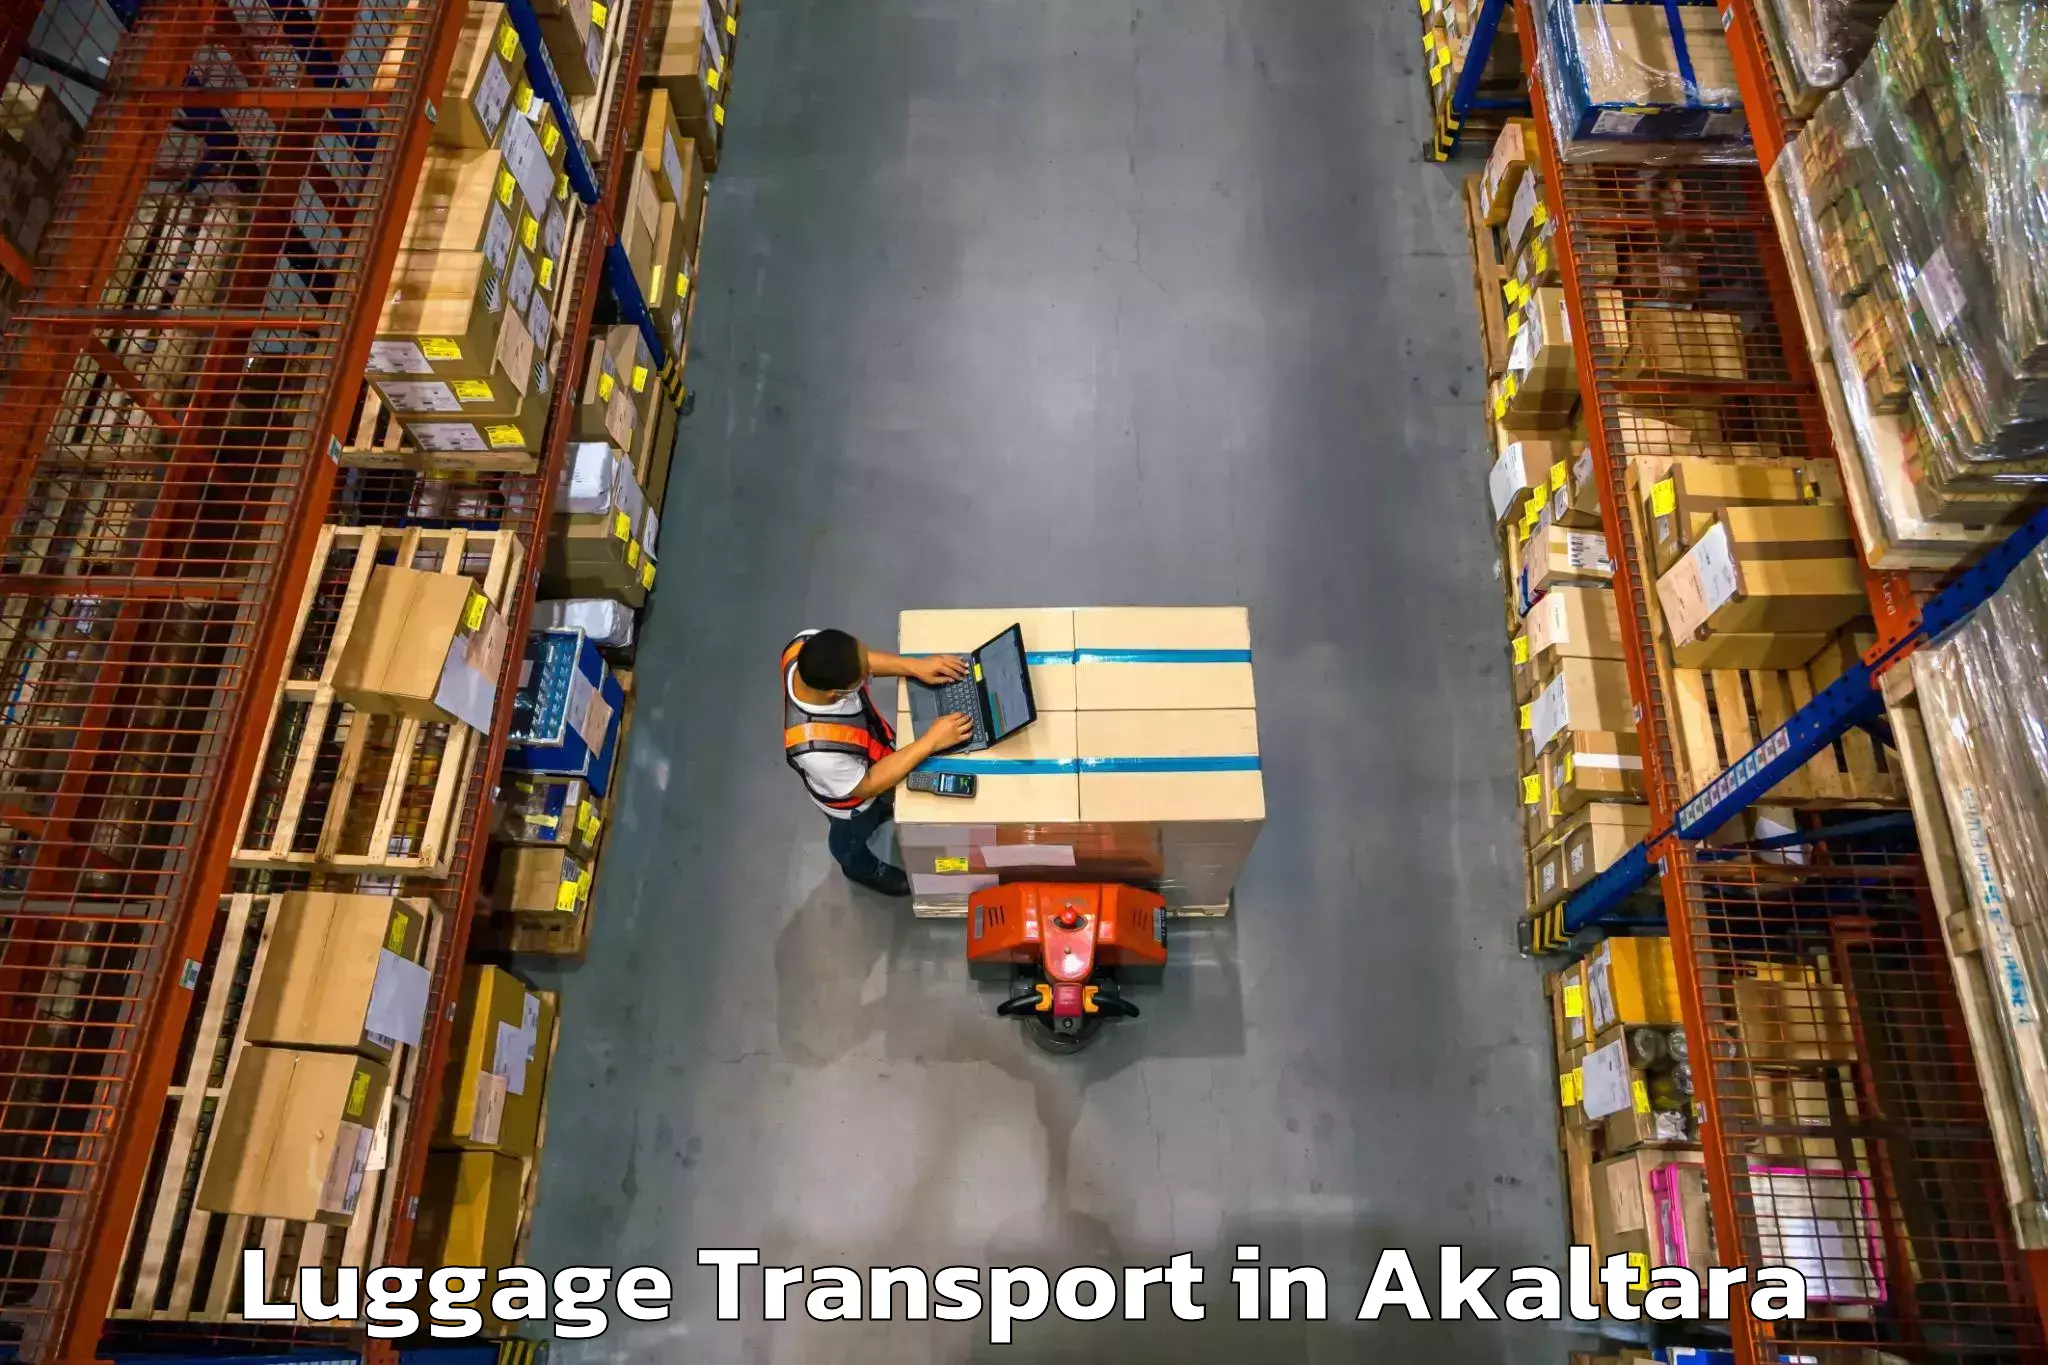 Urban luggage shipping in Akaltara